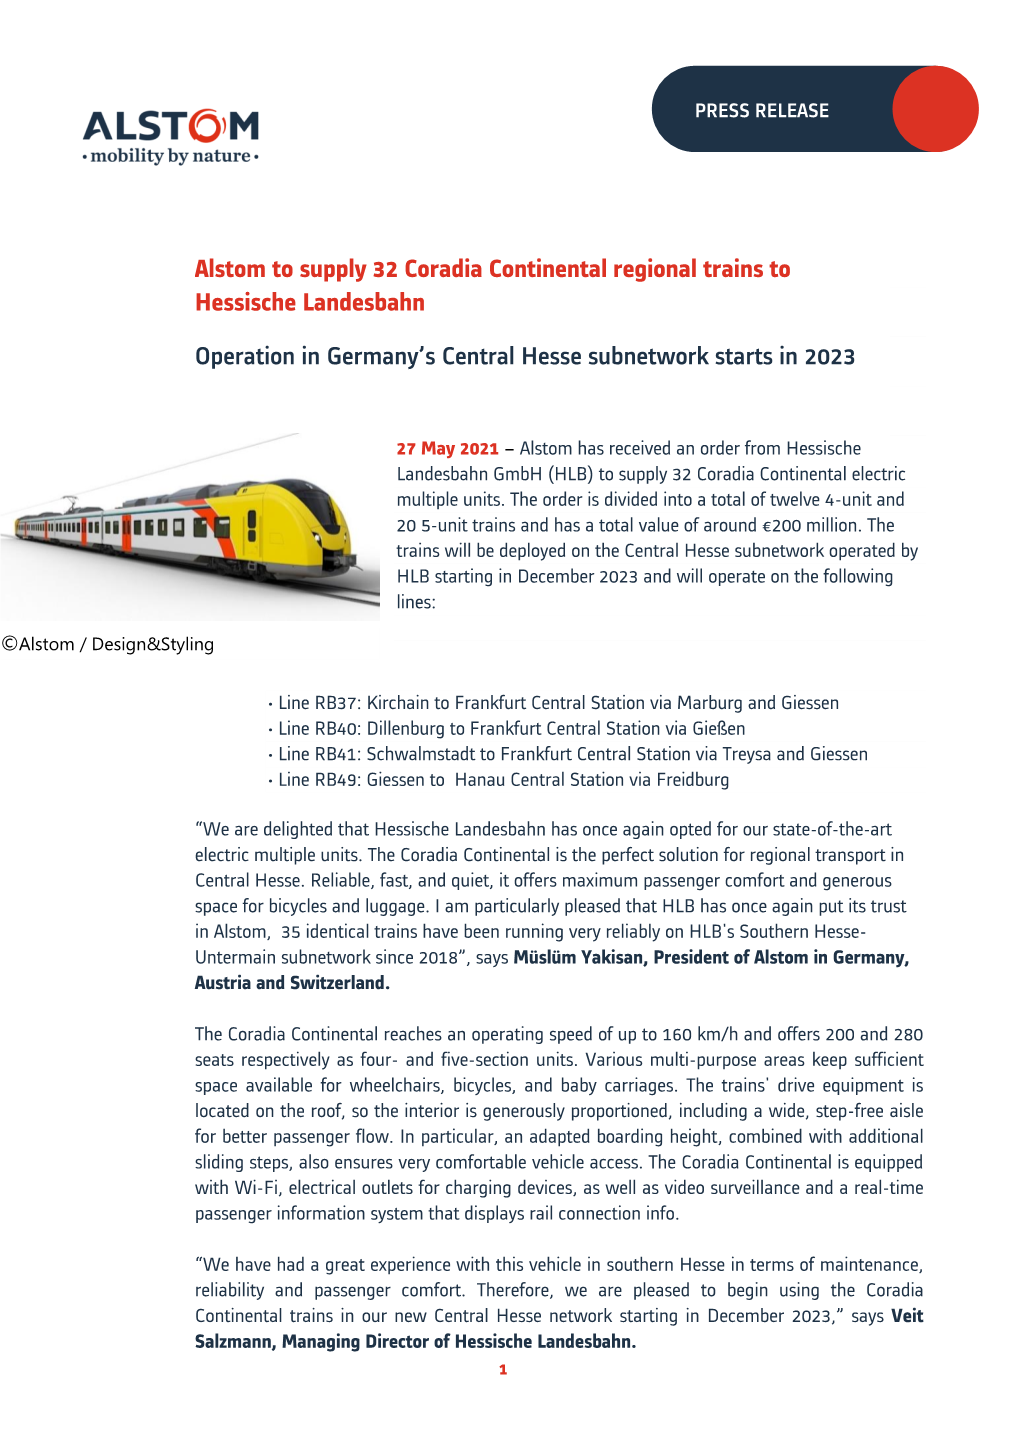 Alstom to Supply 32 Coradia Continental Regional Trains to Hessische Landesbahn